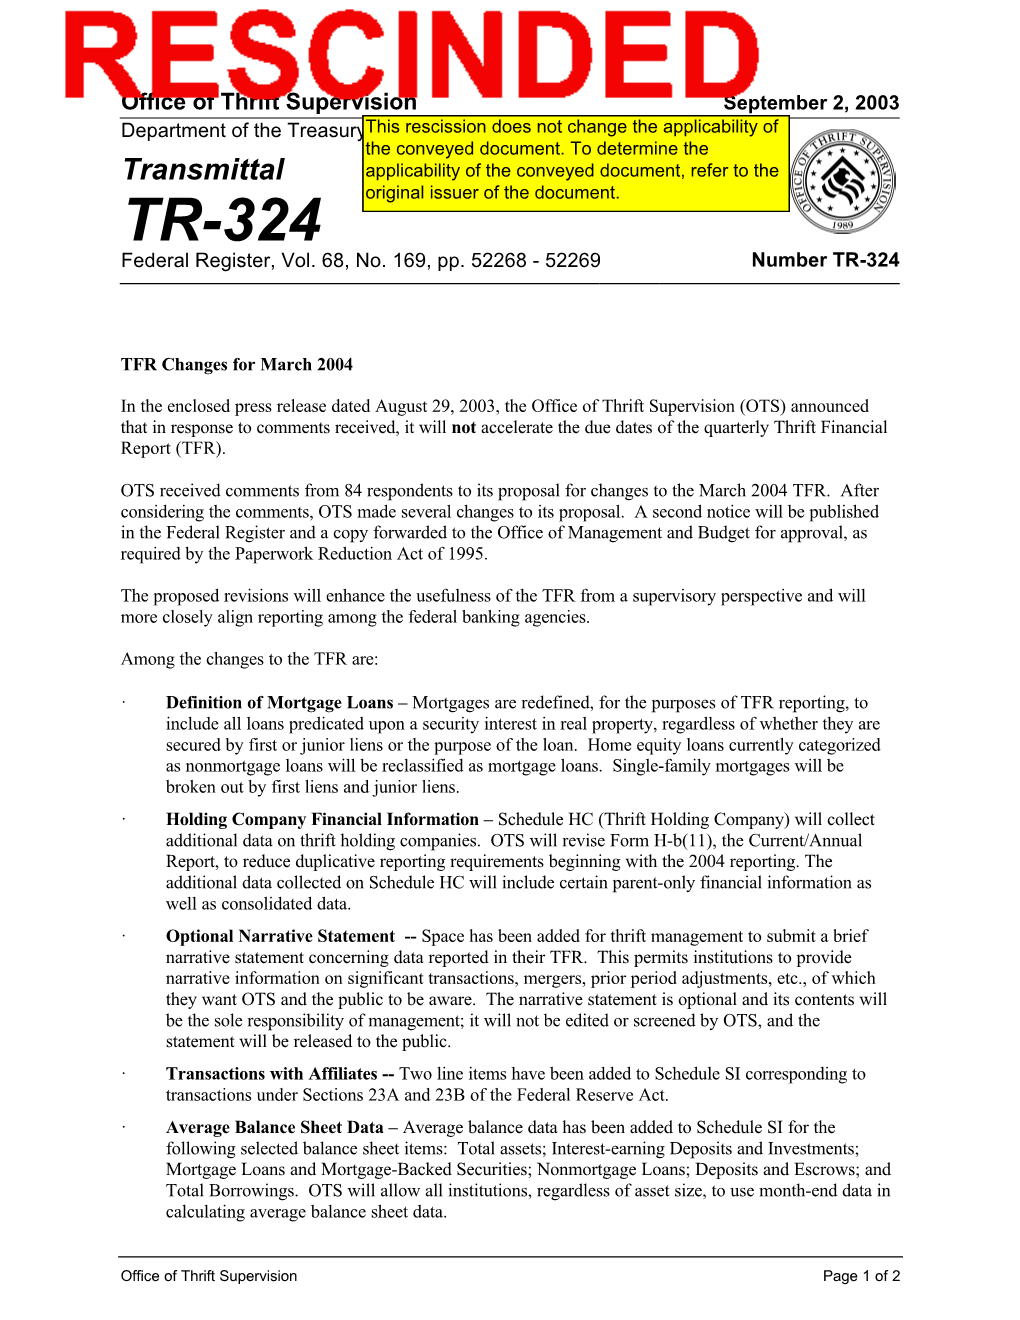 TR 324, Thrift Financial Report, September 2003